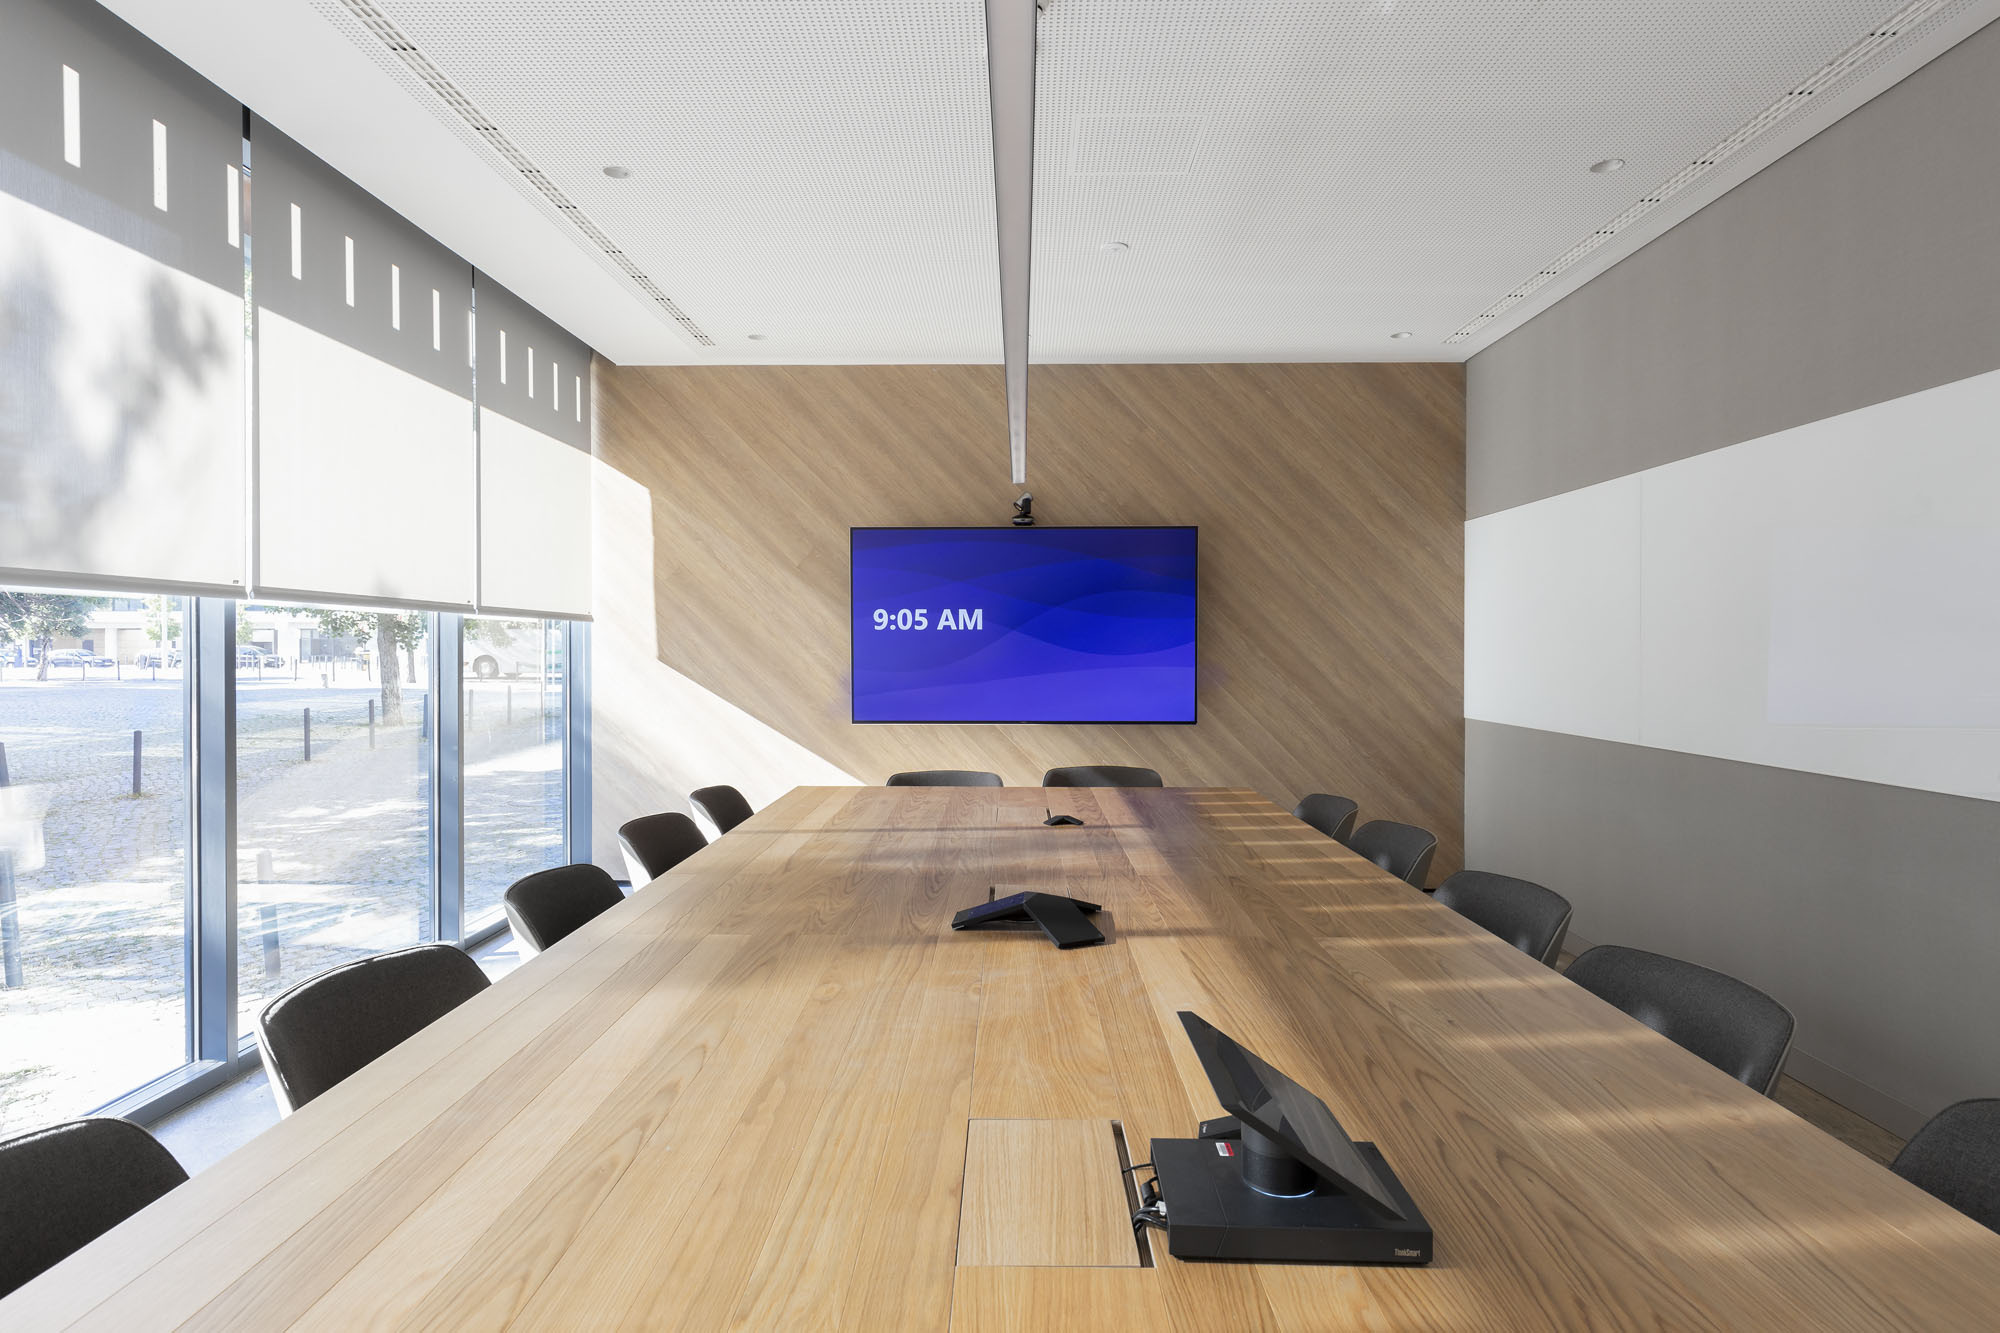 Microsoft(マイクロソフト)のオフィス - ポルトガル, リスボンの会議室/ミーティングスペース